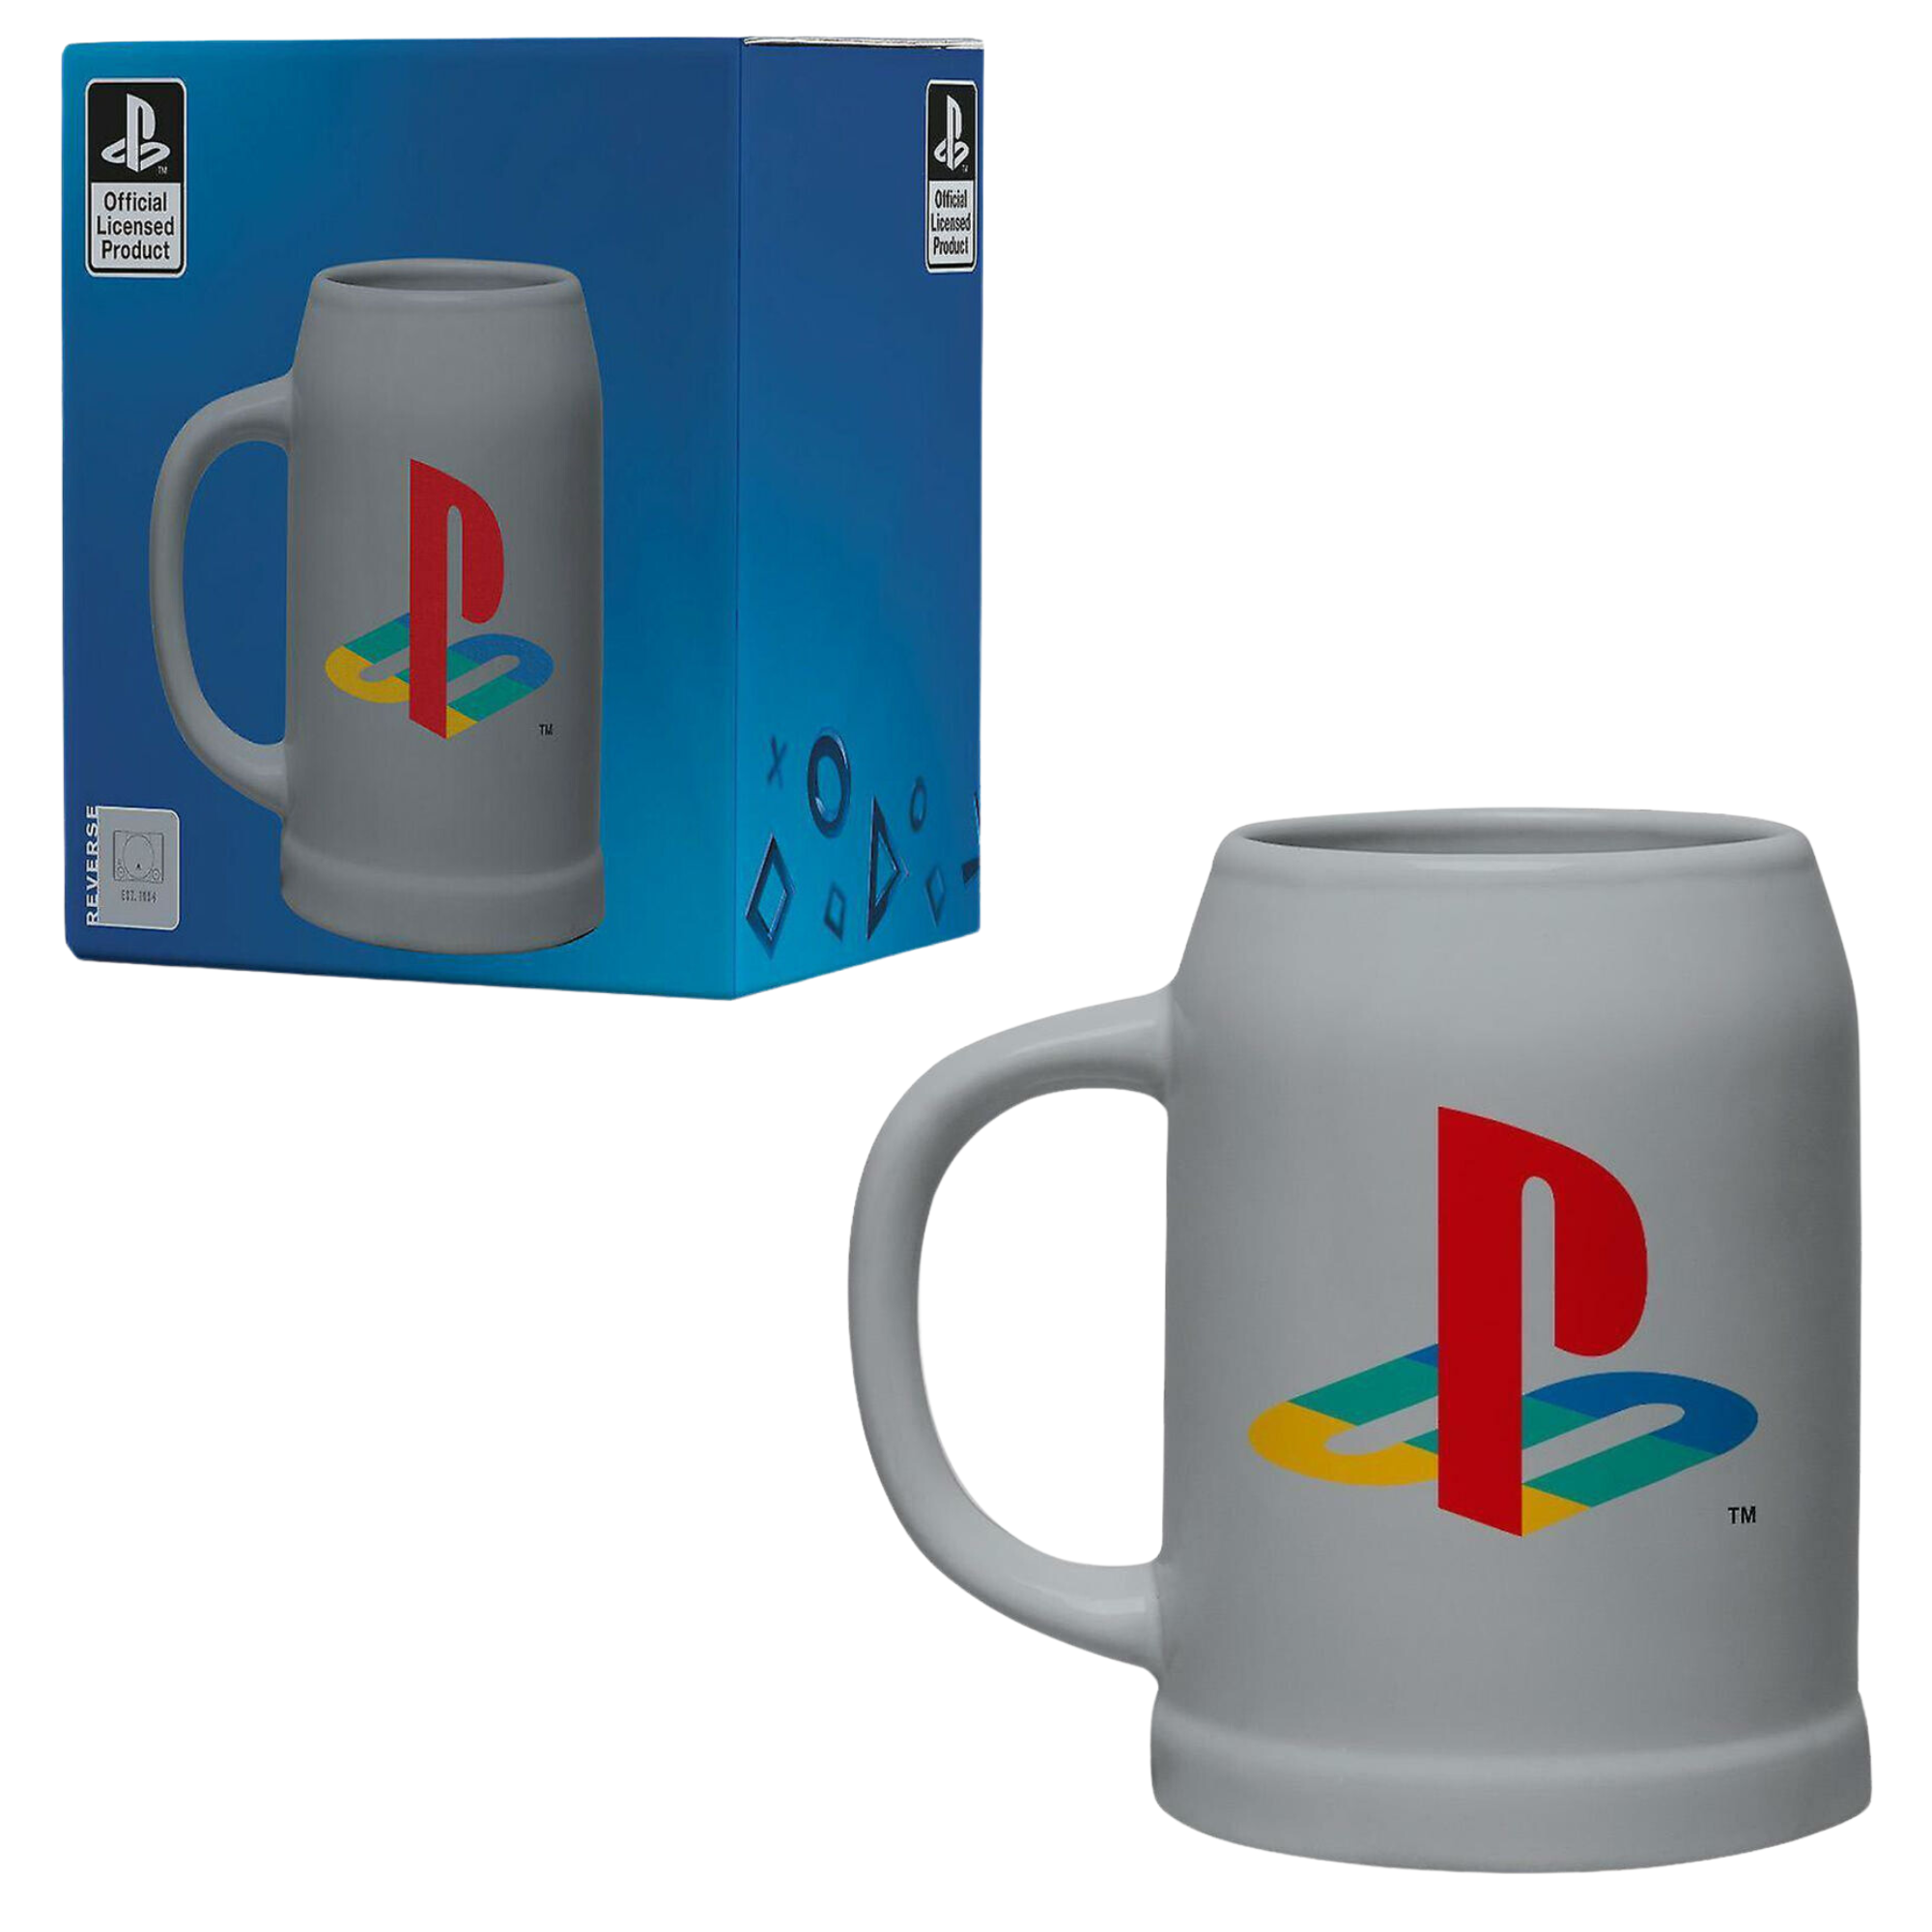 Playstation Stein Twin Pack - 500ml Glass Stein with Metal Logo and 600ml Ceramic Stein - Toptoys2u